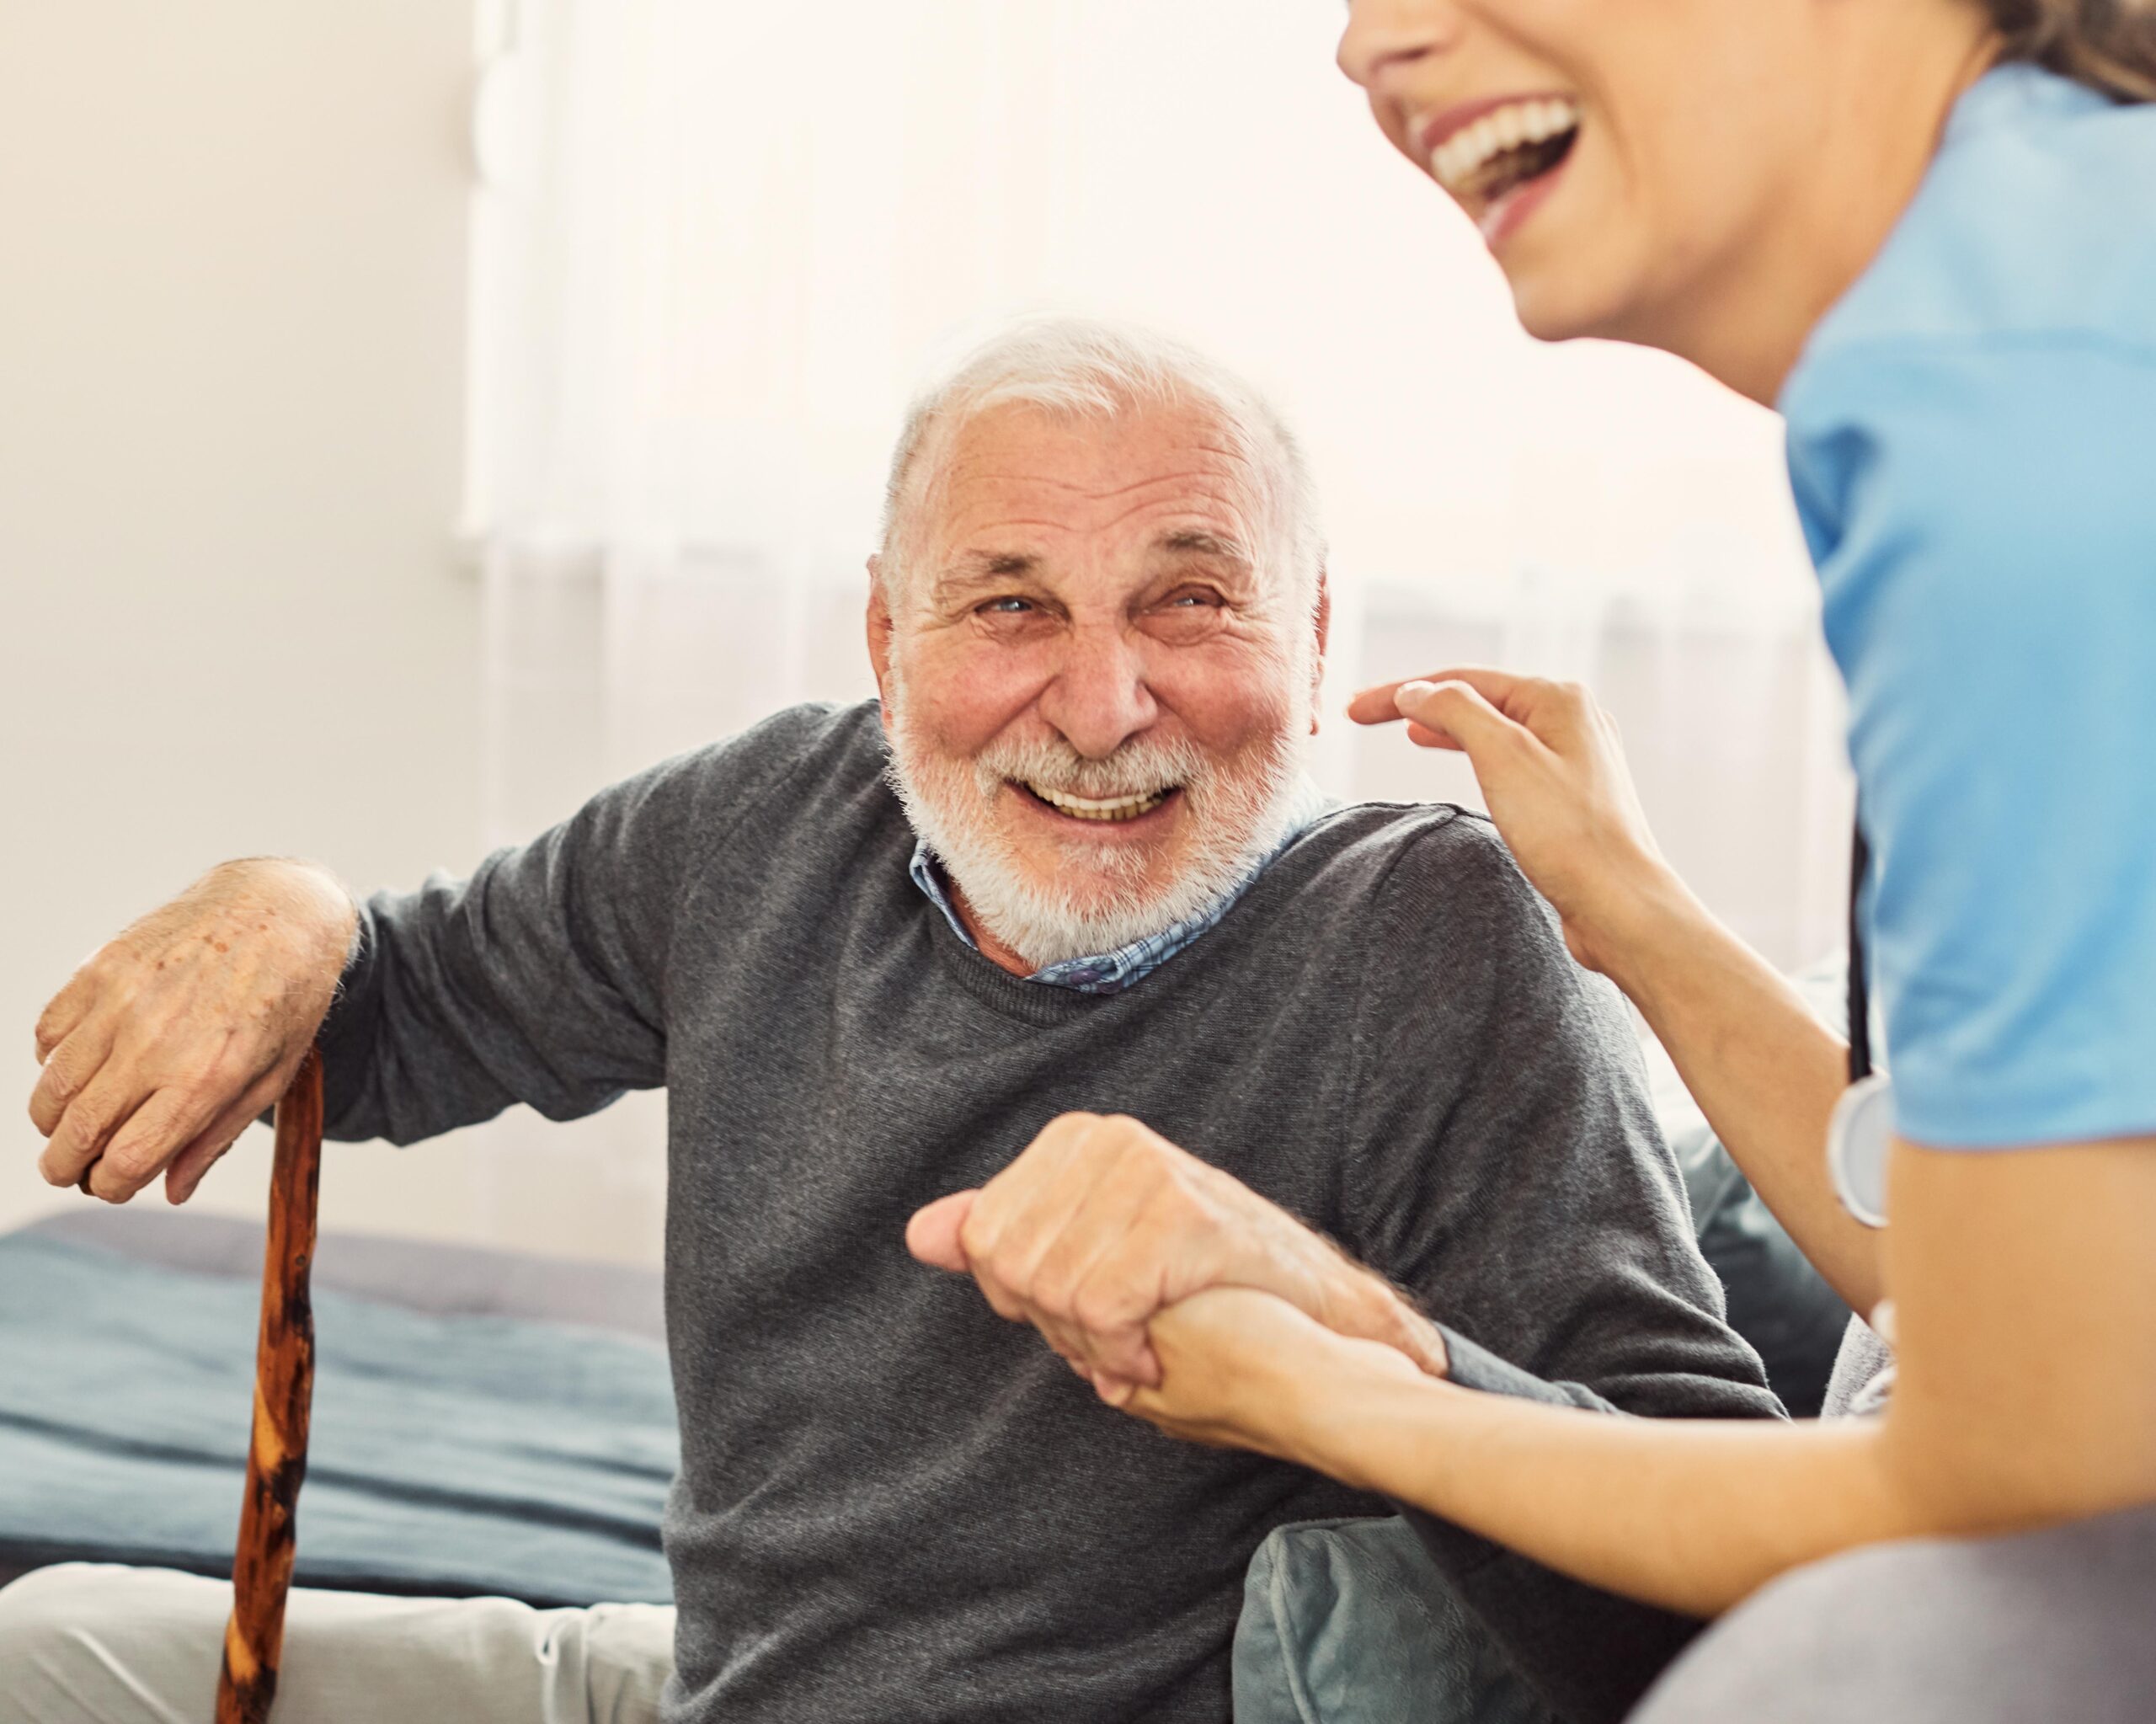 Doctor or nurse caregiver with senior man holding walking cane at home or nursing home